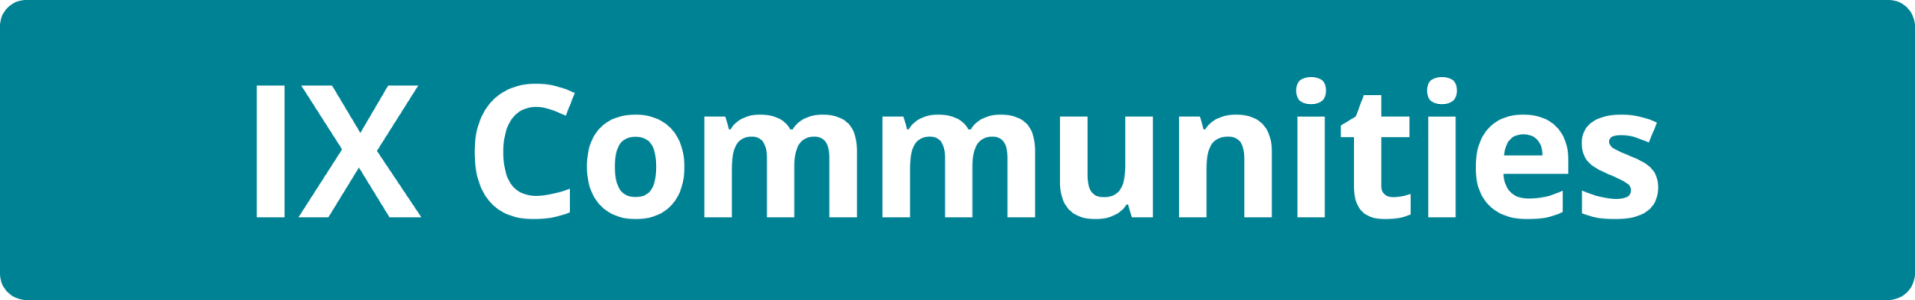 IX Communities Logo